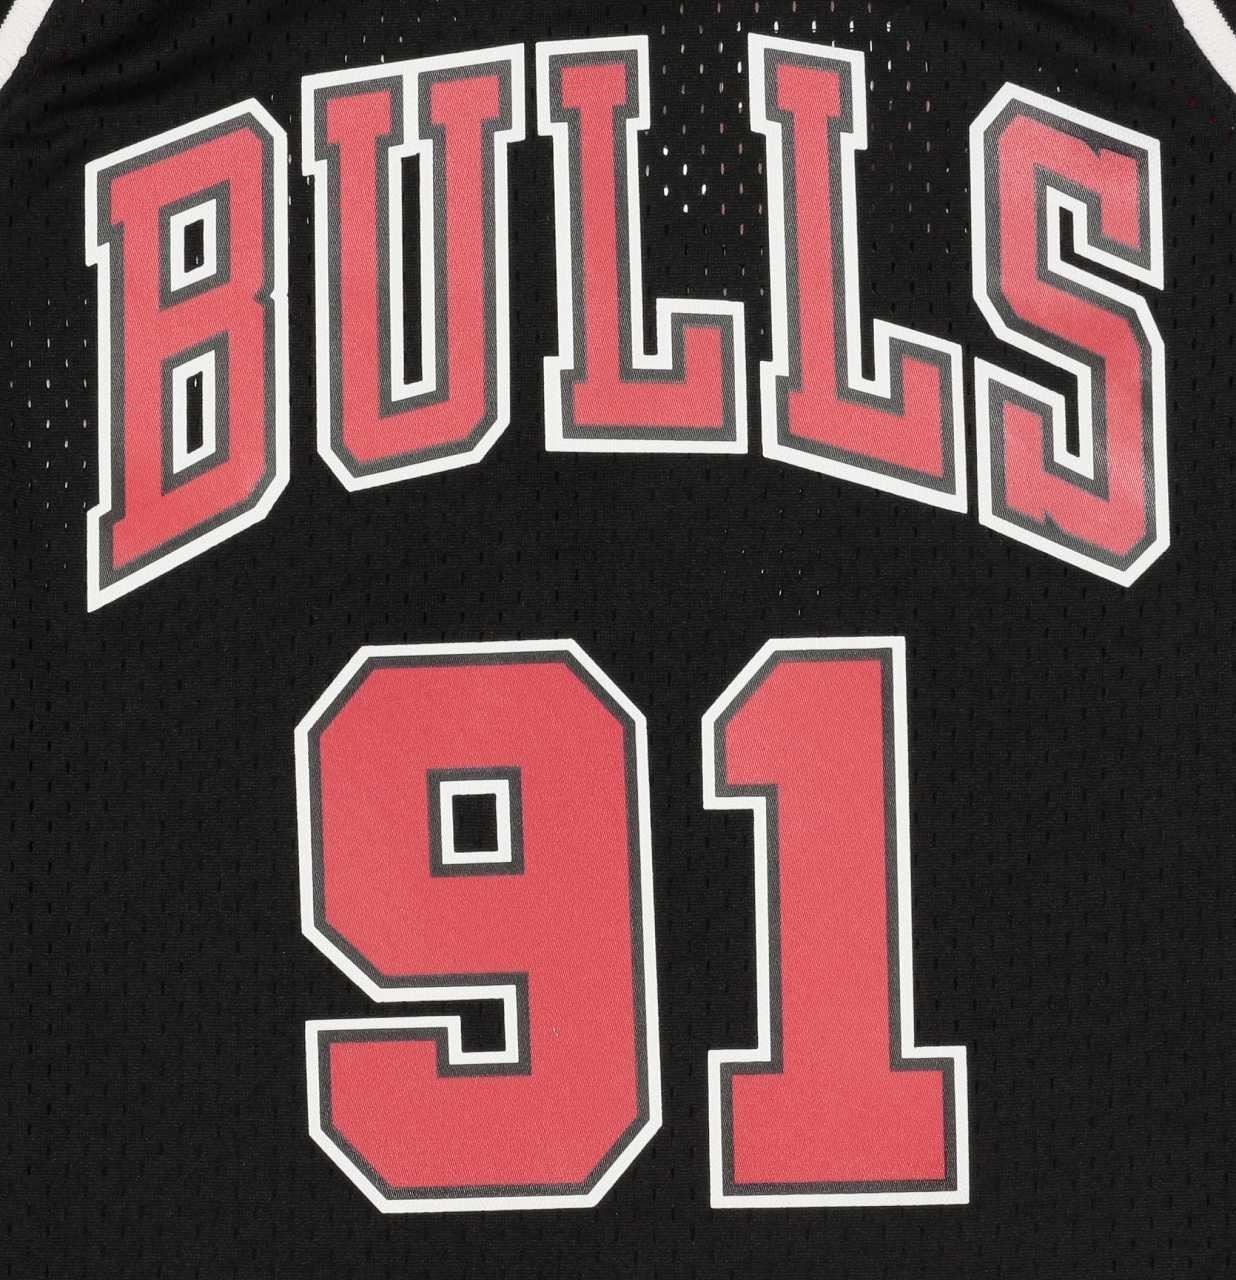 Dennis Rodman #91 Chicago Bulls NBA Swingman Mitchell & Ness